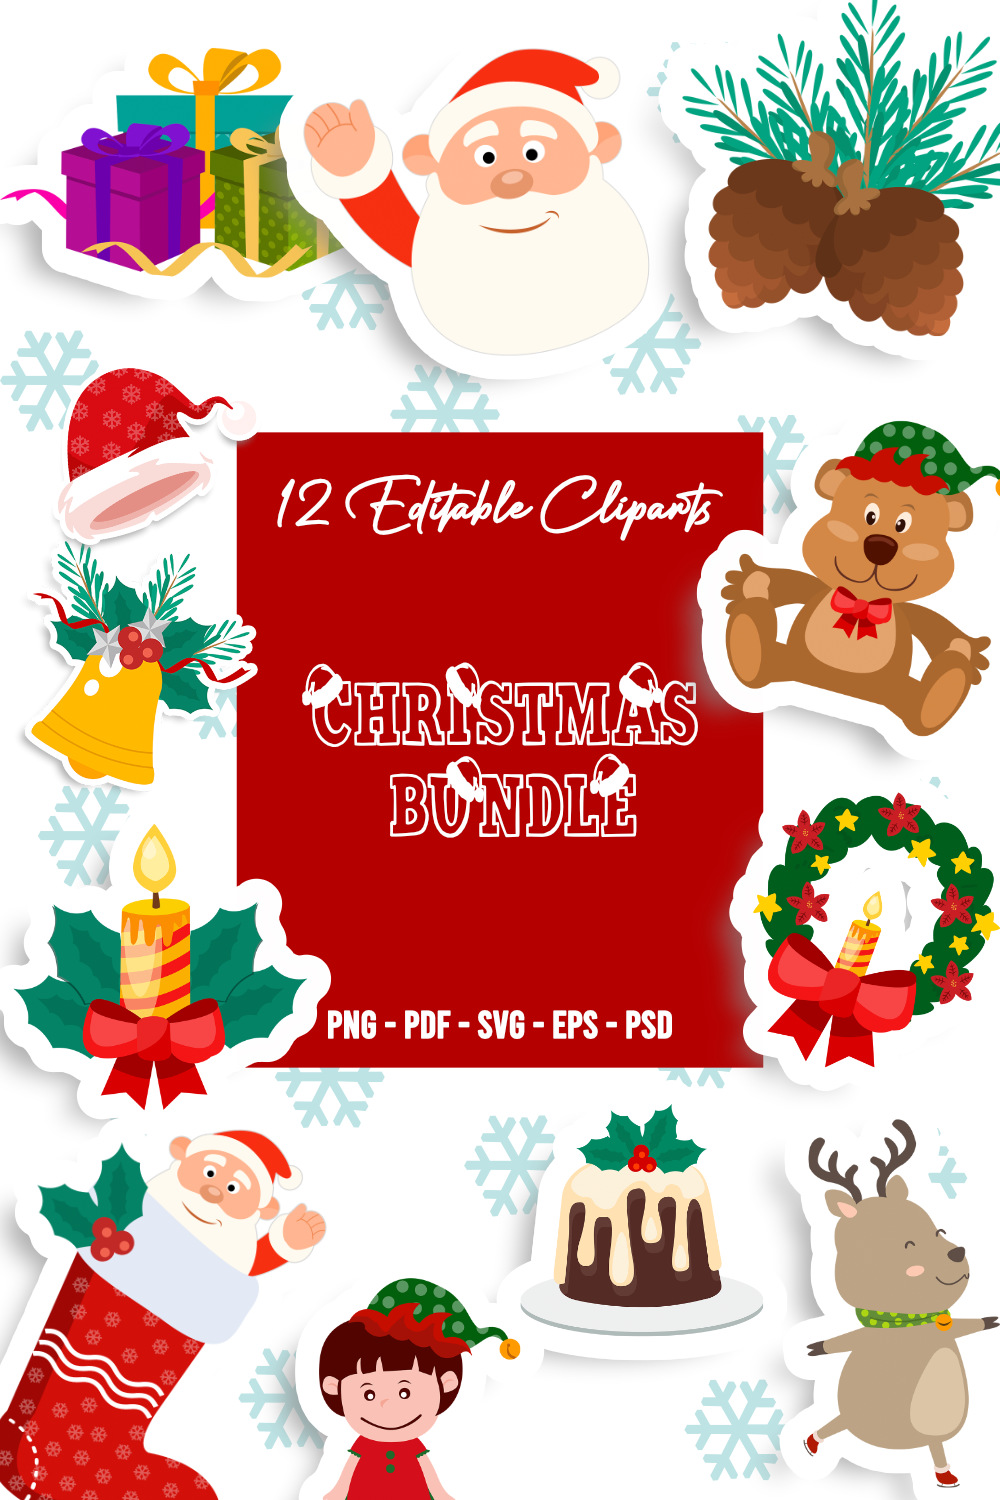 Christmas Bundle – 12 Editable Cliparts pinterest image.